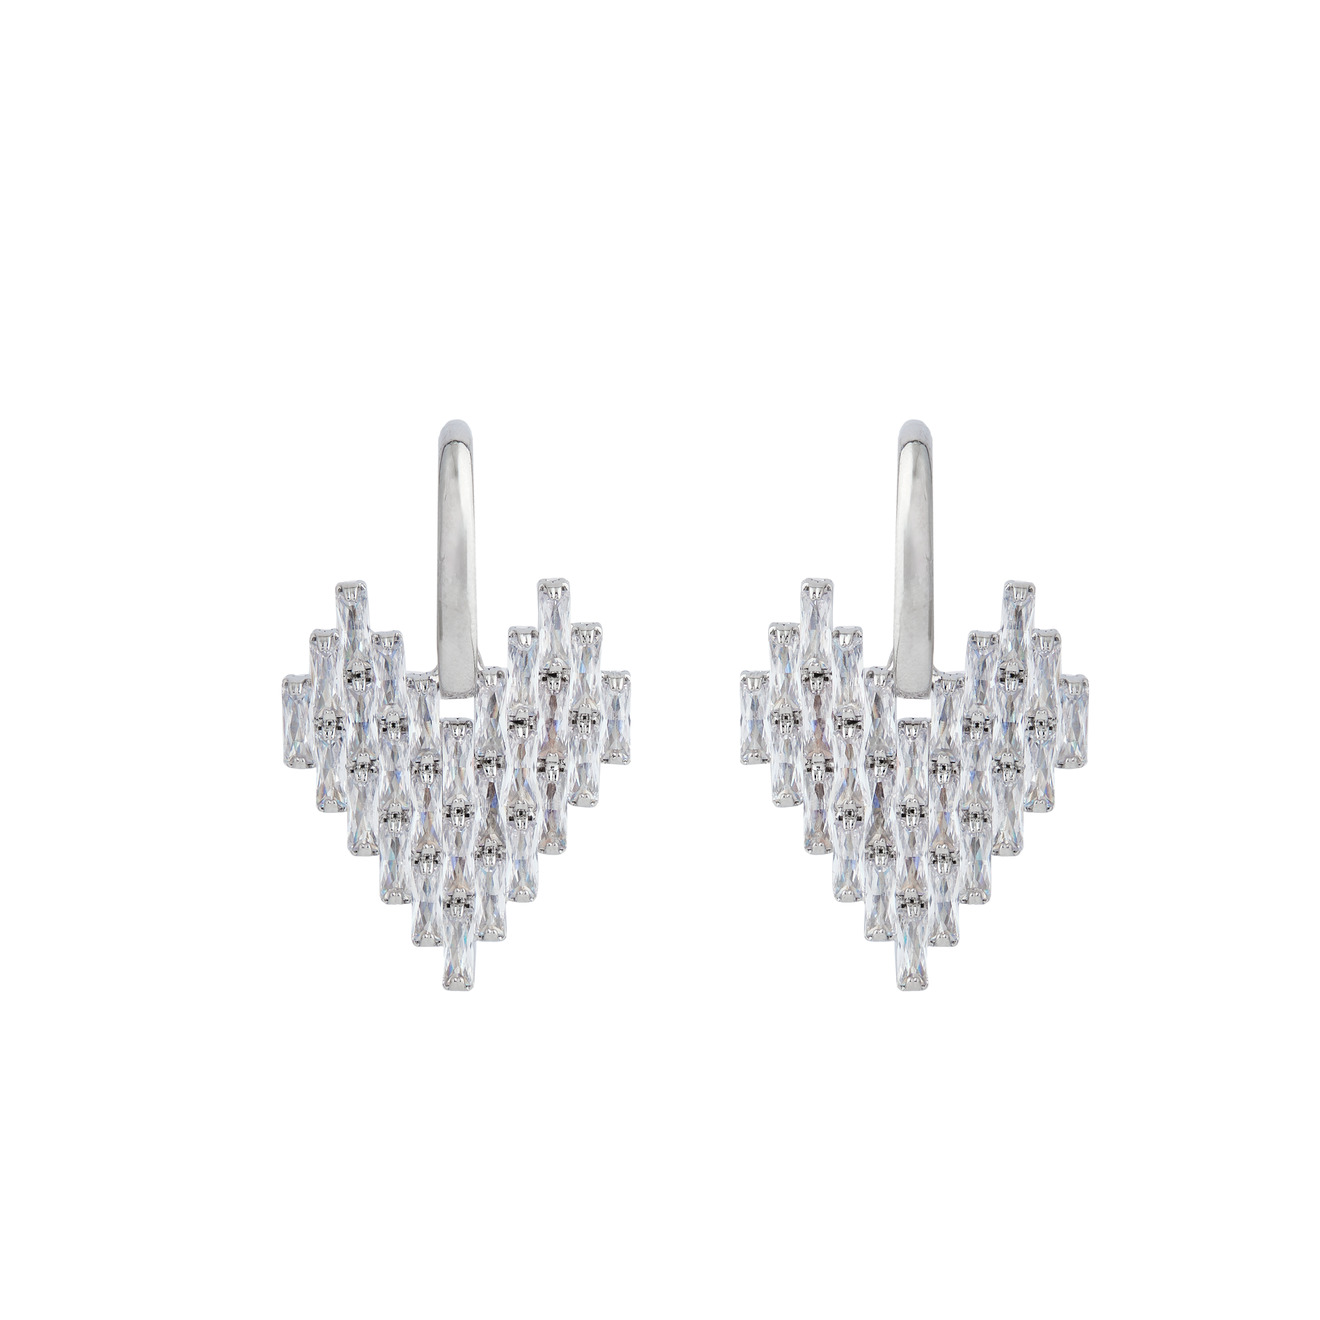 Herald Percy Серебристые серьги-сердца с багетами кристаллов herald percy серебристые серьги с кристаллами багетами